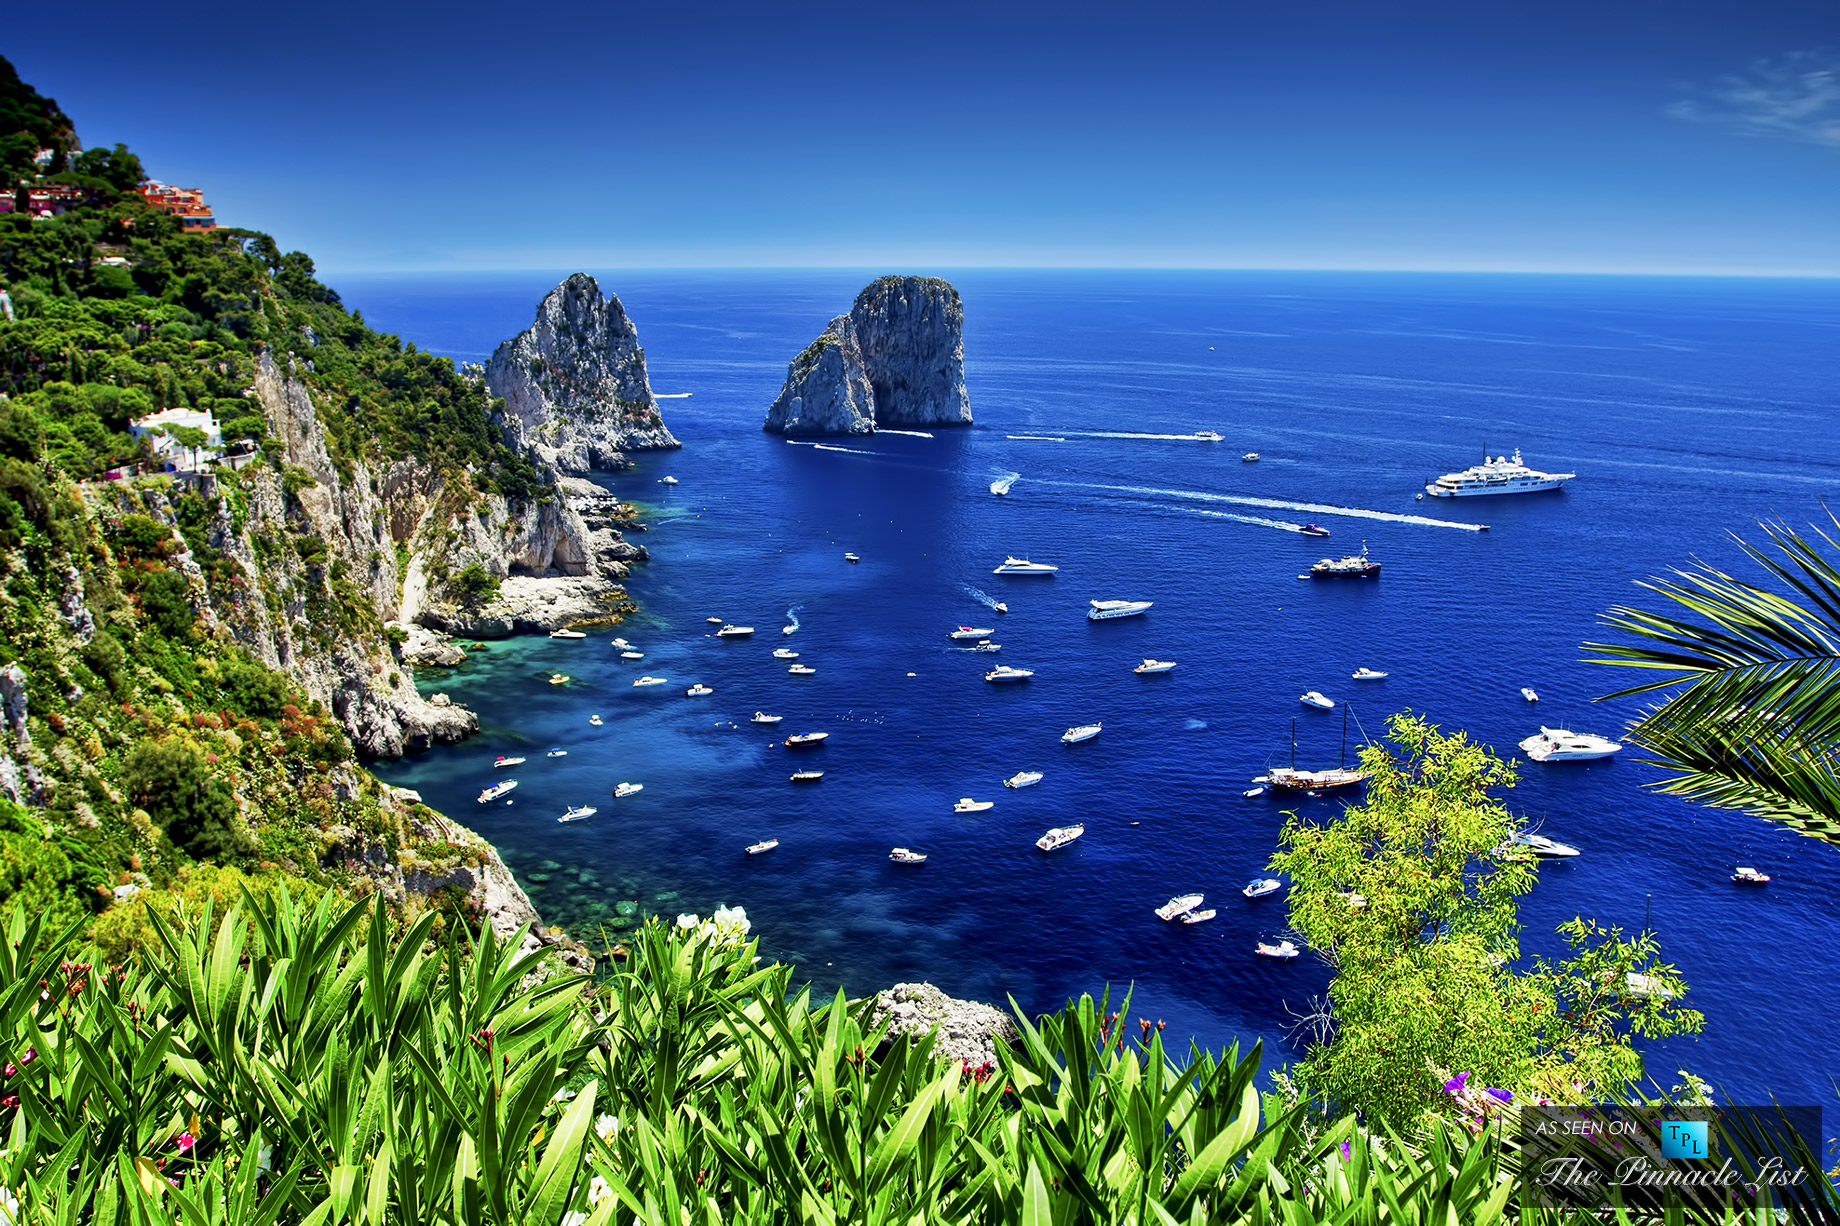 Tyrrhenian Sea off the Sorrento Peninsula – Capri Island, Italy